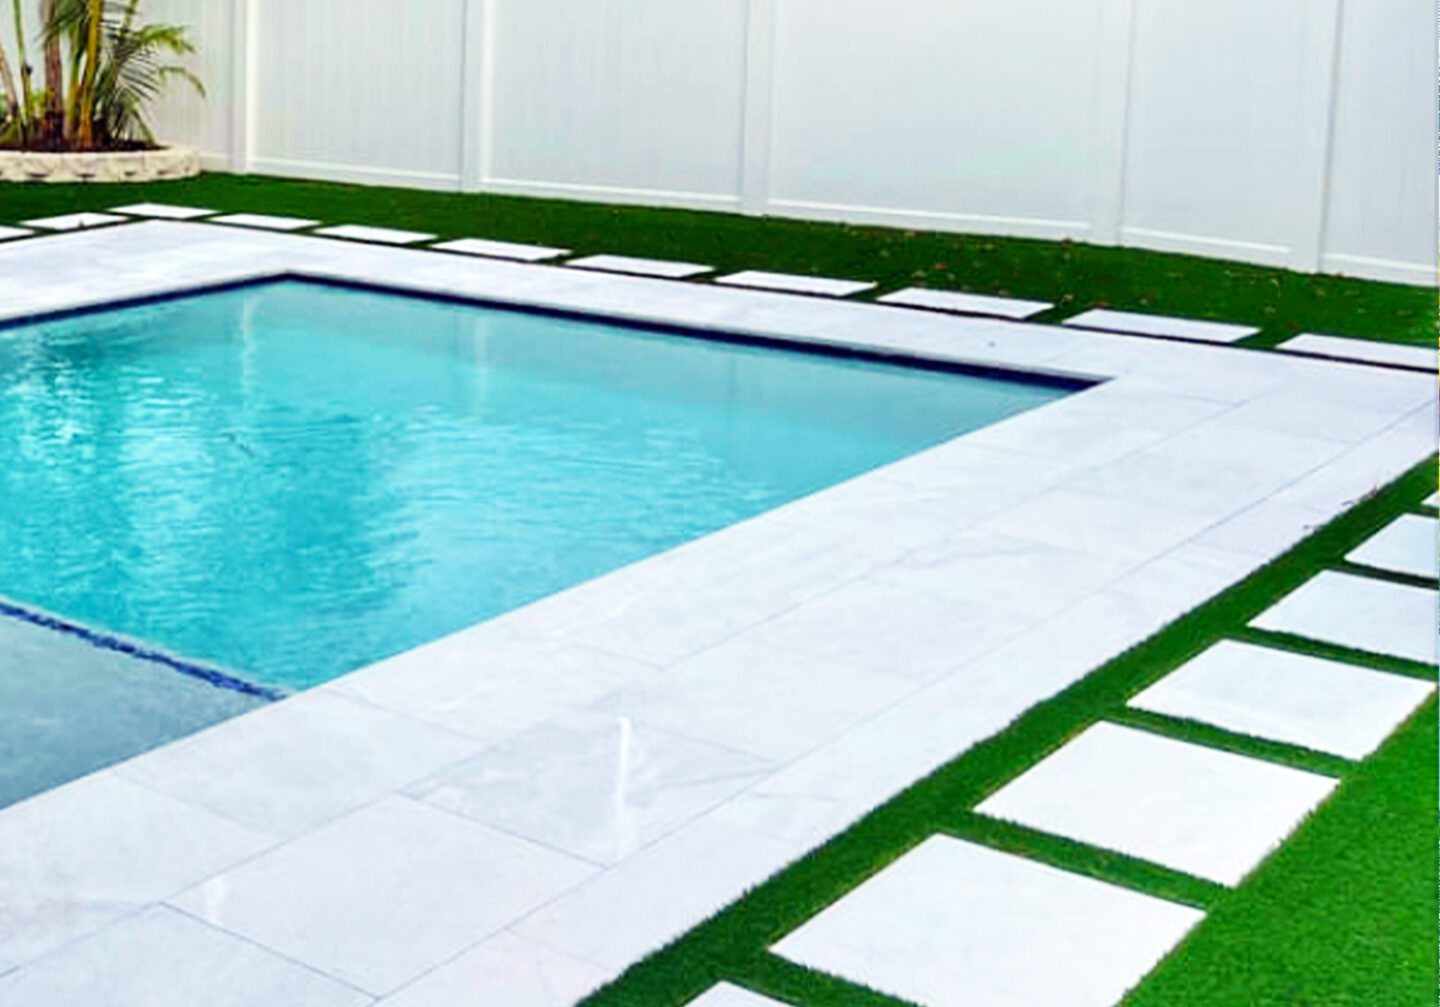 Pool Deck Turf - Artificial Turf Installation, Pool Turf, Artificial Grass, Landscape - West Palm Beach, Wellington, Delray, Jupiter, Palm Beach County, Broward County, Martin County - Artificial Turf Guy_2